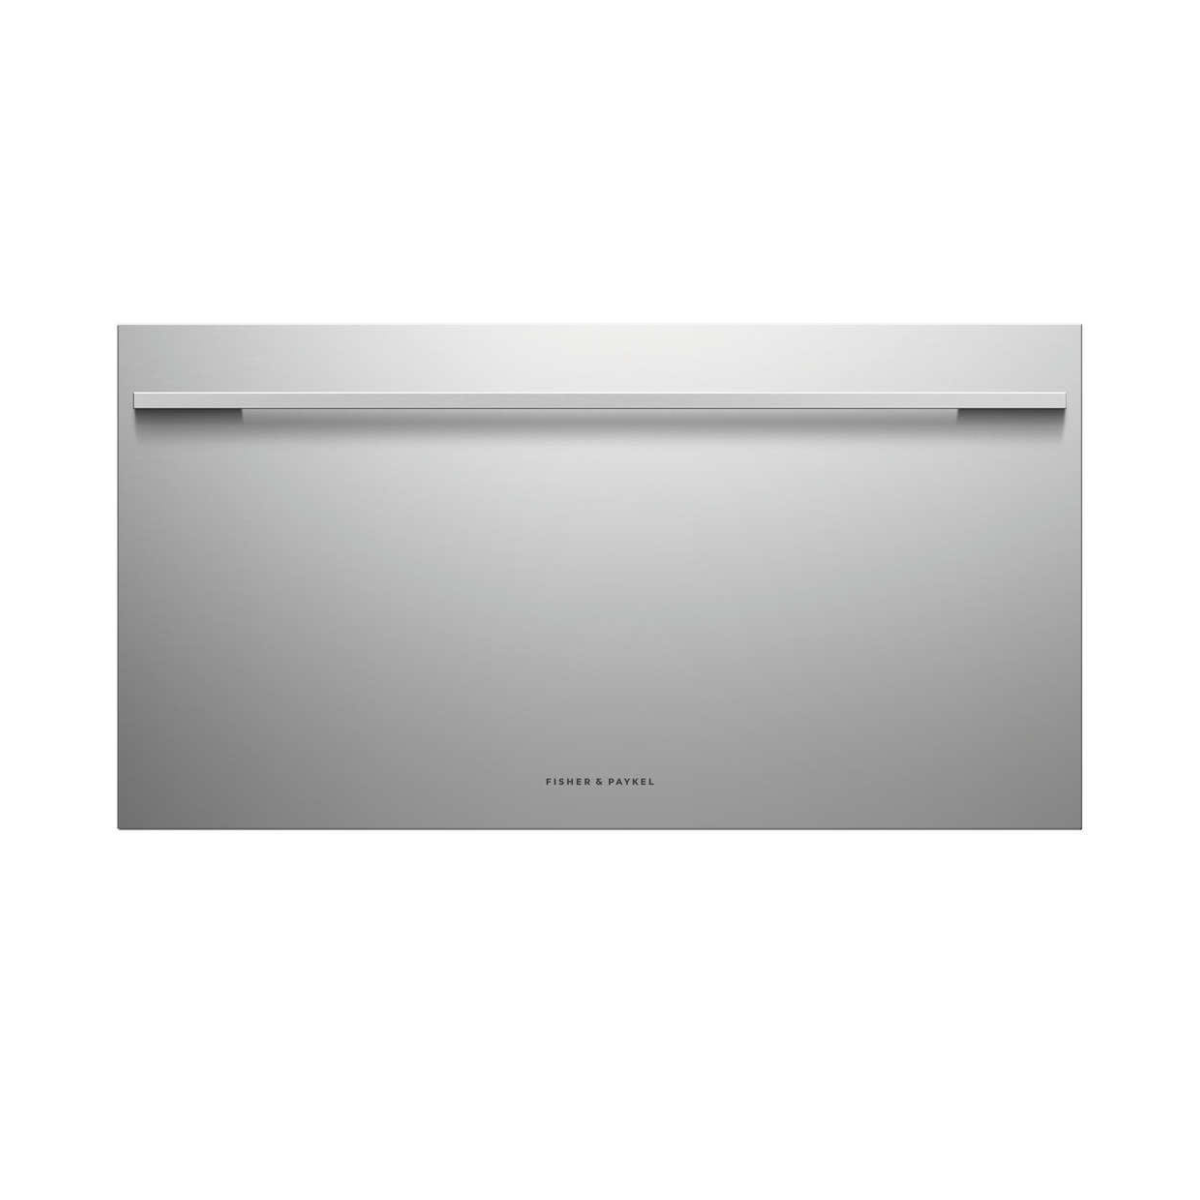 34-Inch Built-in Single Drawer Refrigerator